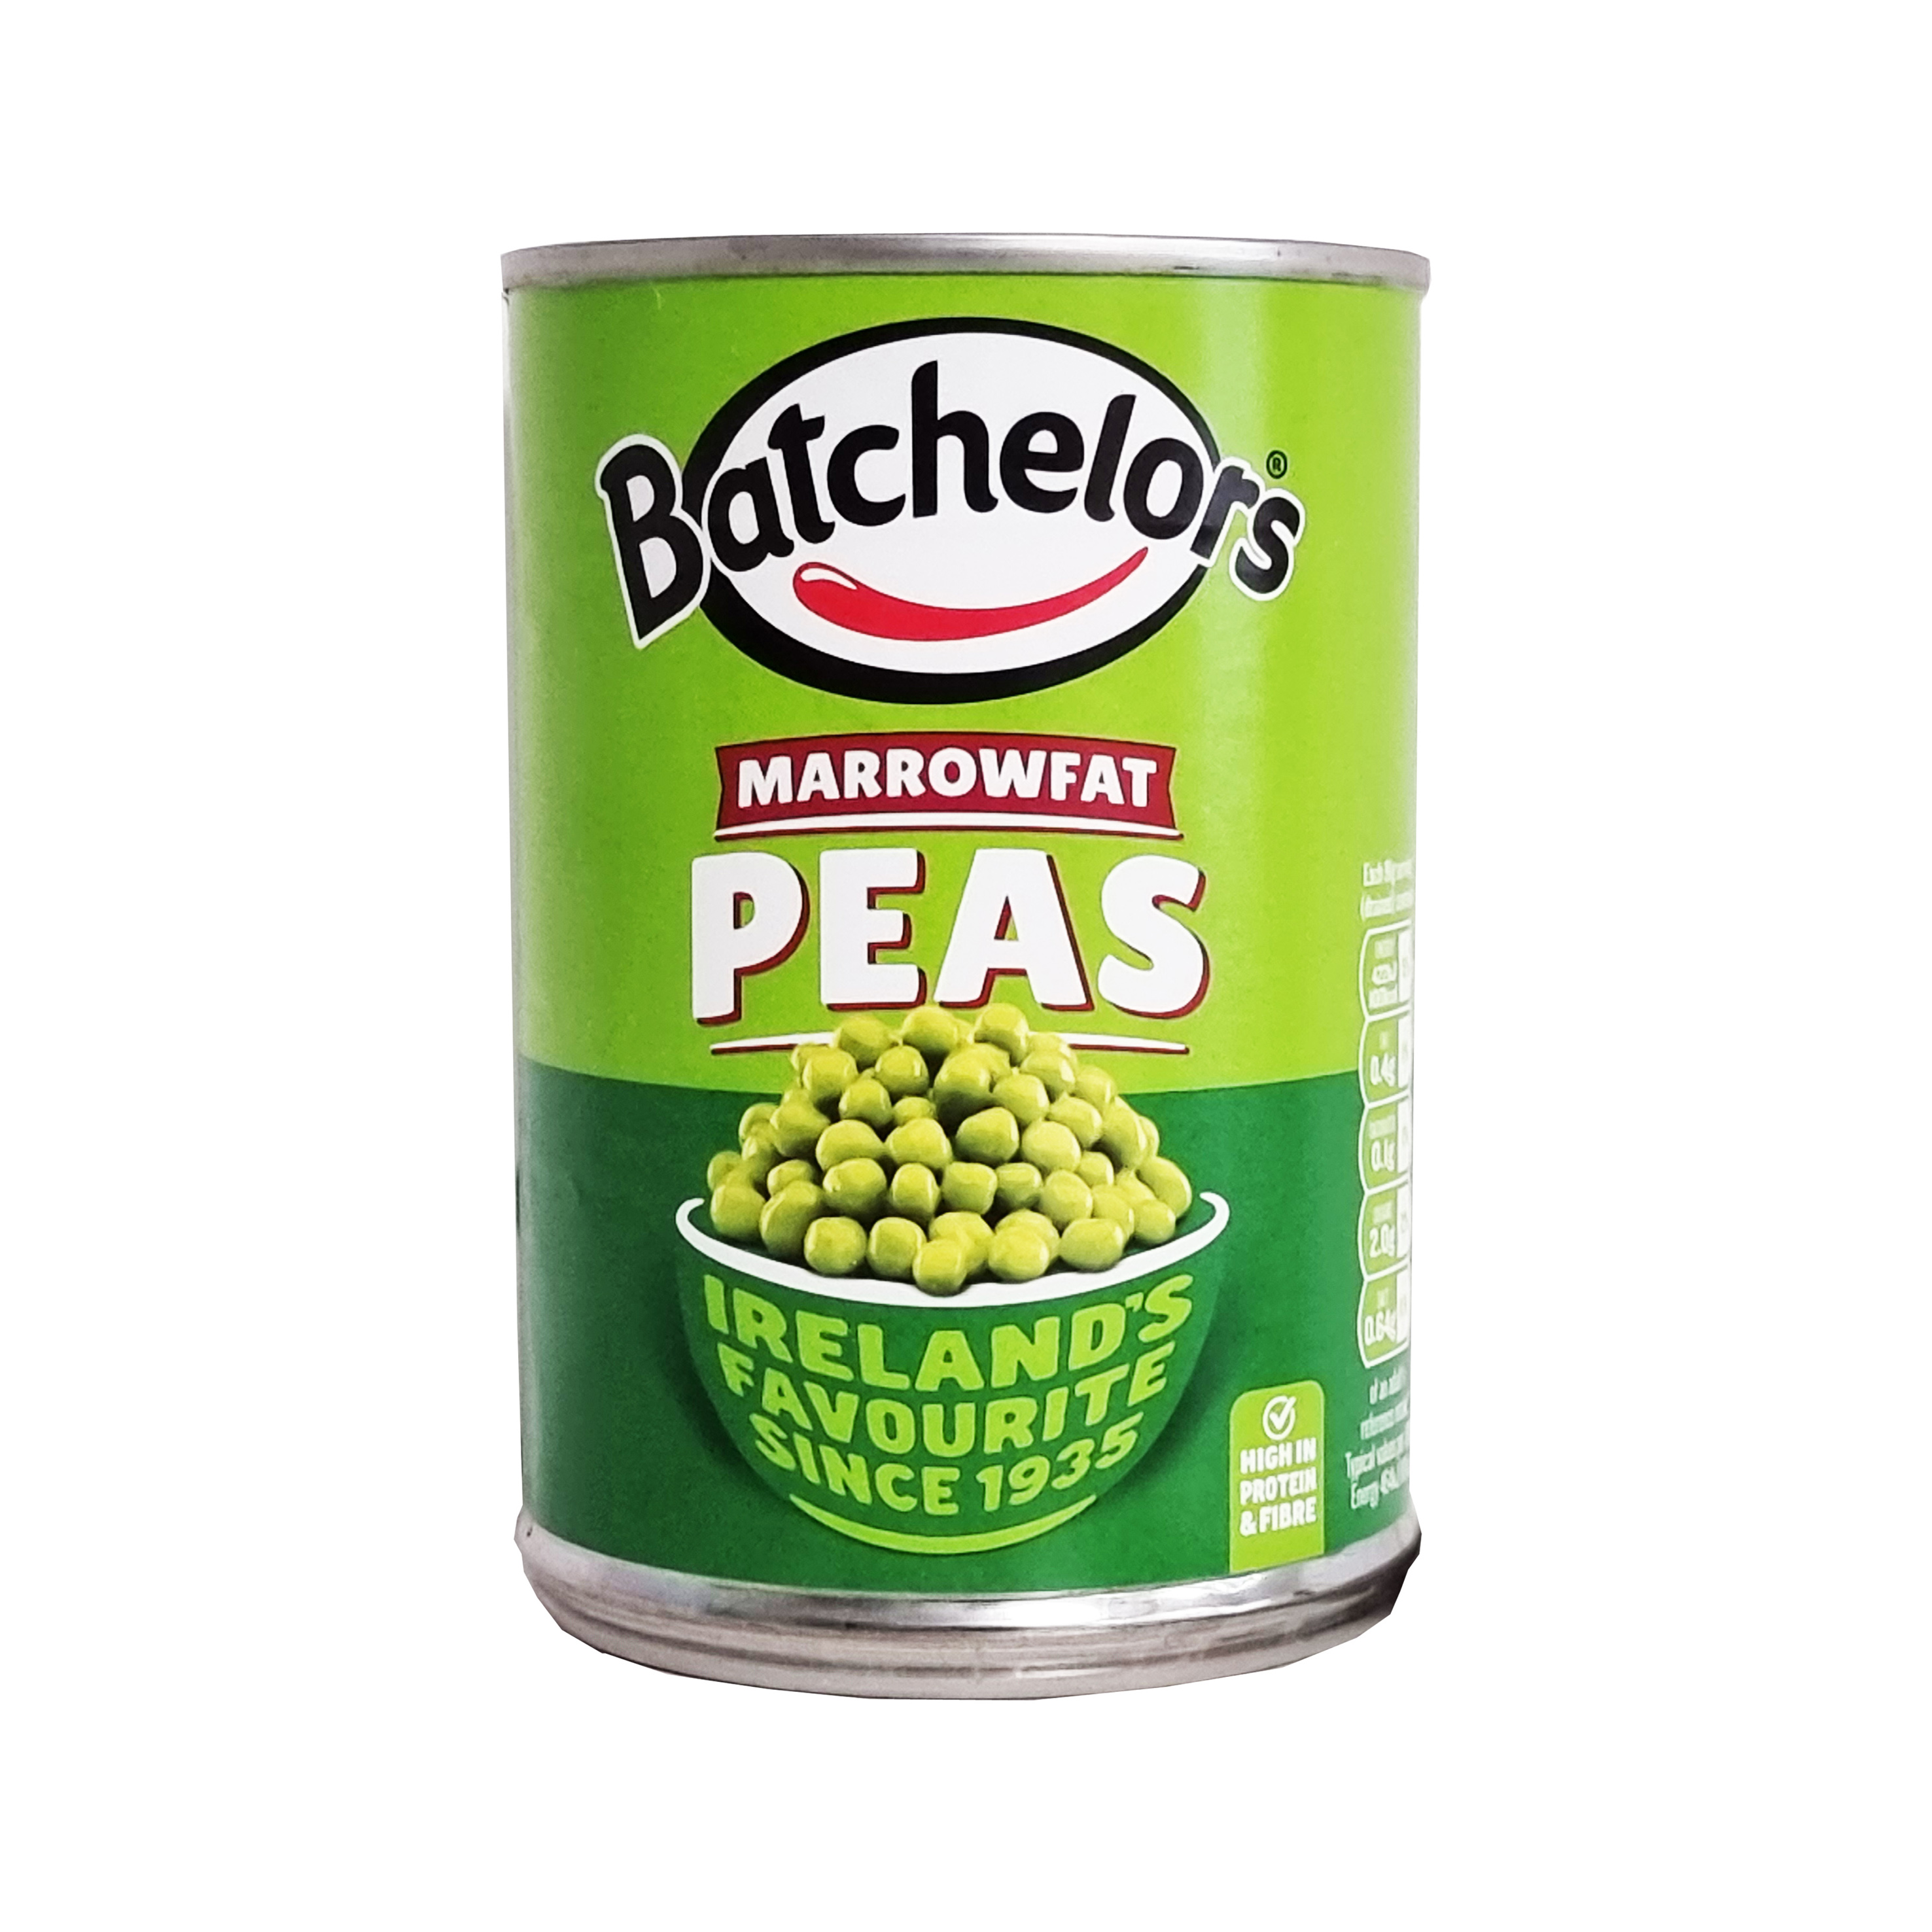 Batchelors marrowfat peas 420g